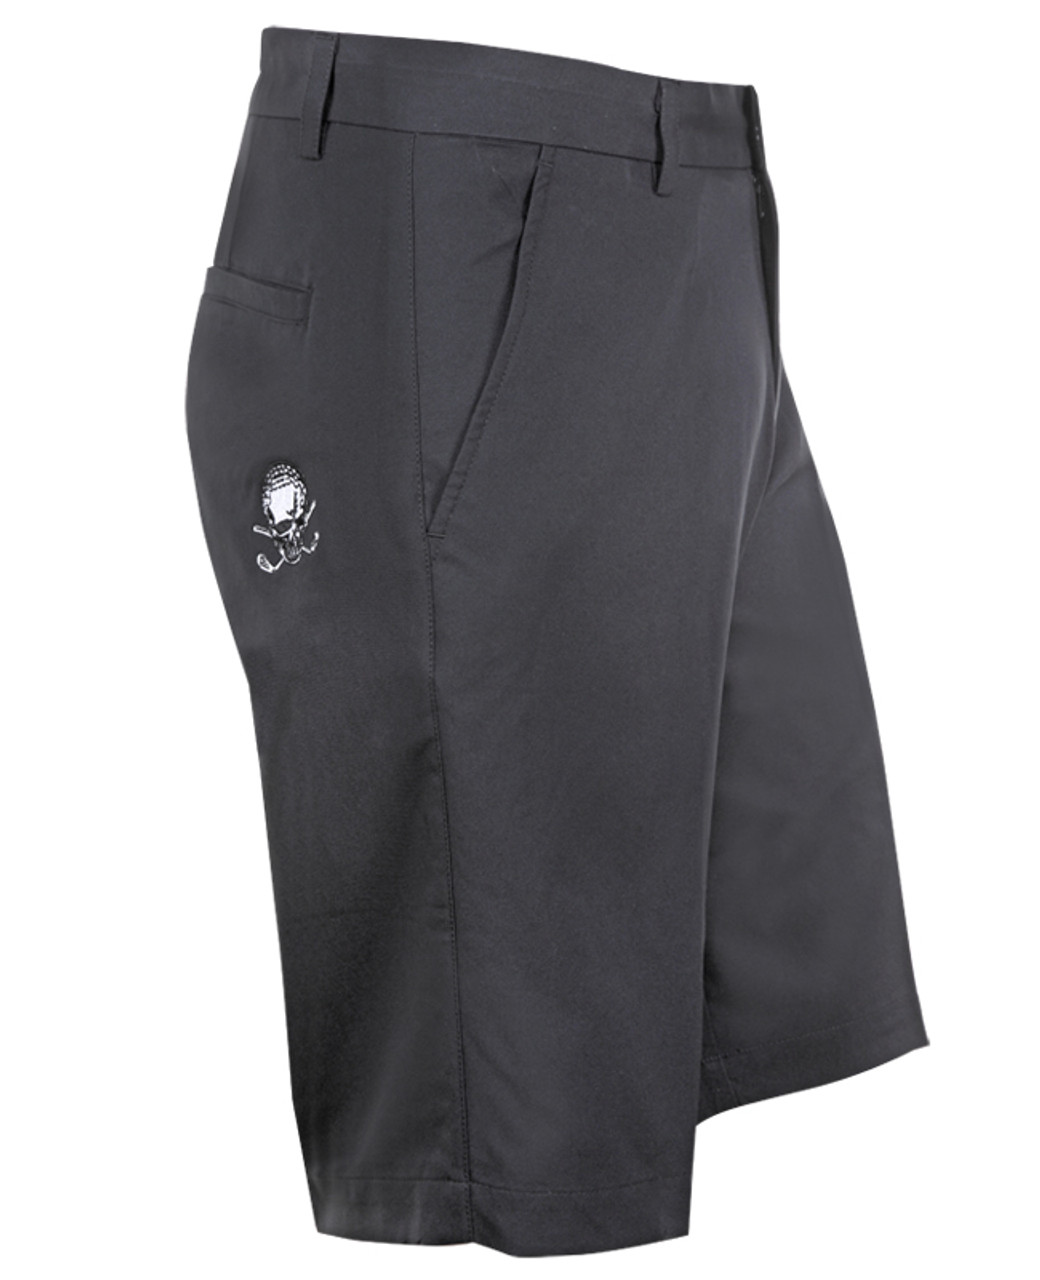 Golf Shorts for Men - ProCool Performance Skull - OB Black